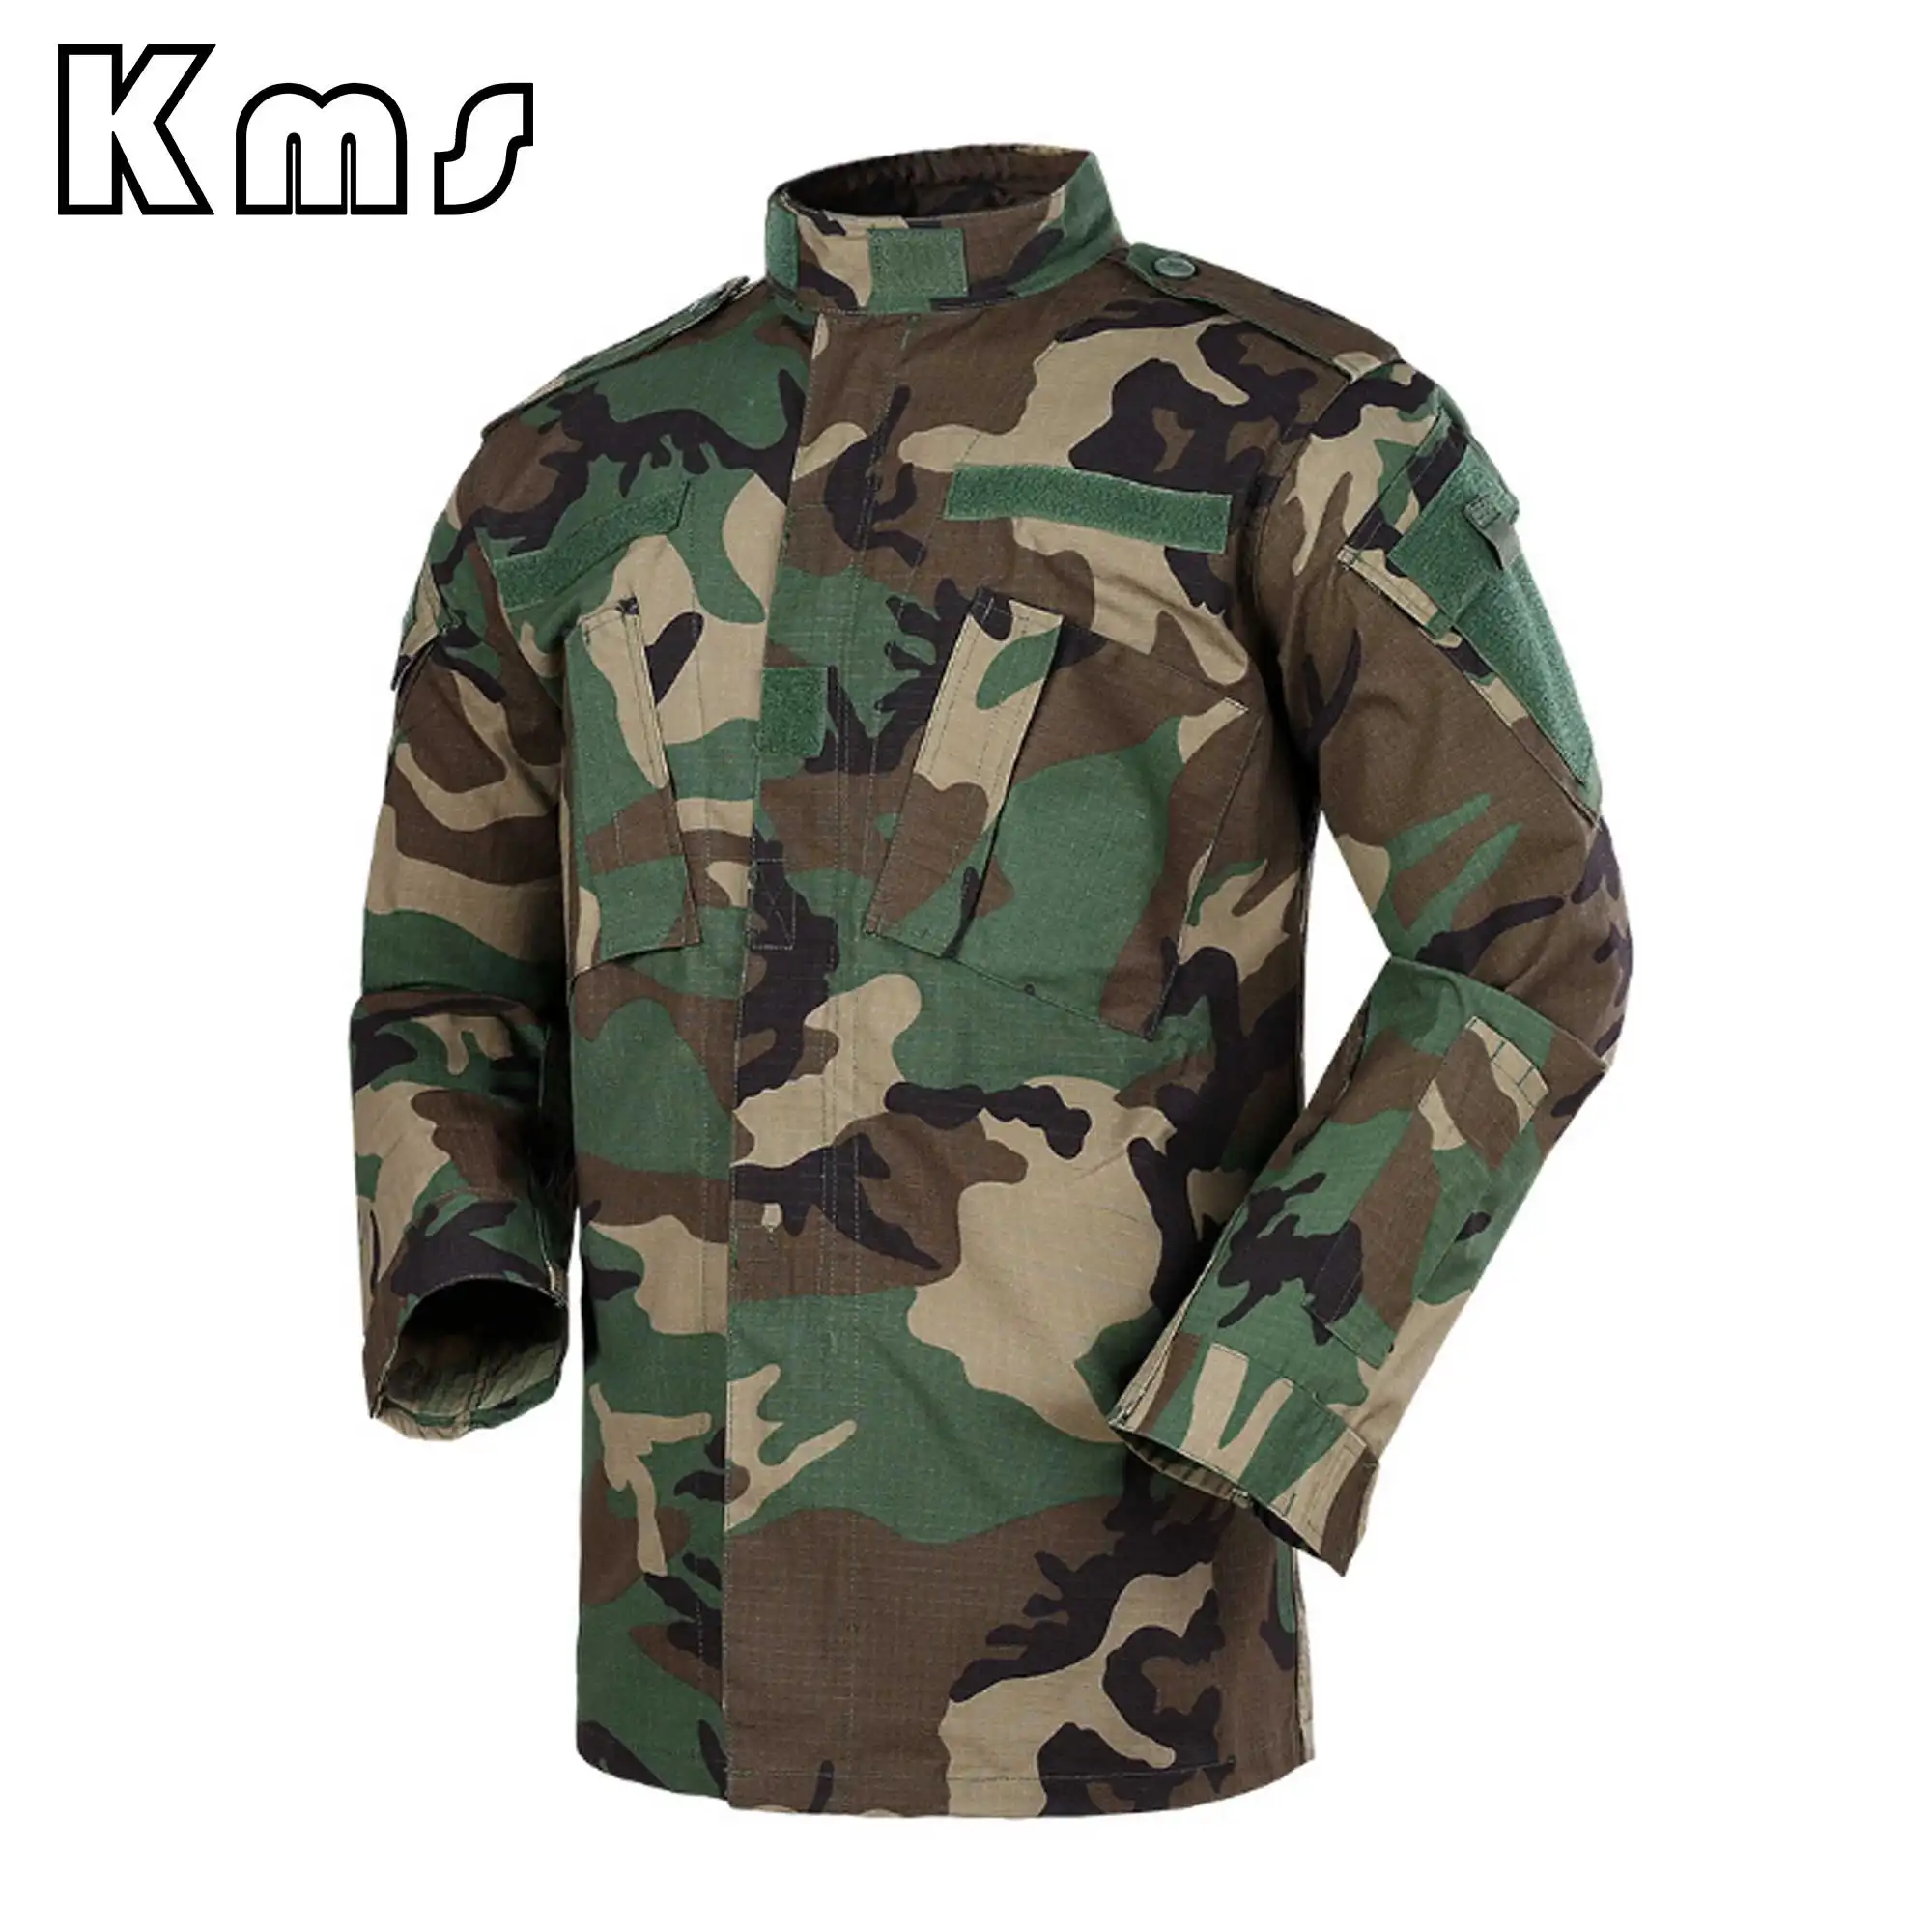 KMS Woodland Camouflage Kunden spezifische Sicherheits uniform Set Zeremonielle Uniform acu Tactical Jungle Uniform